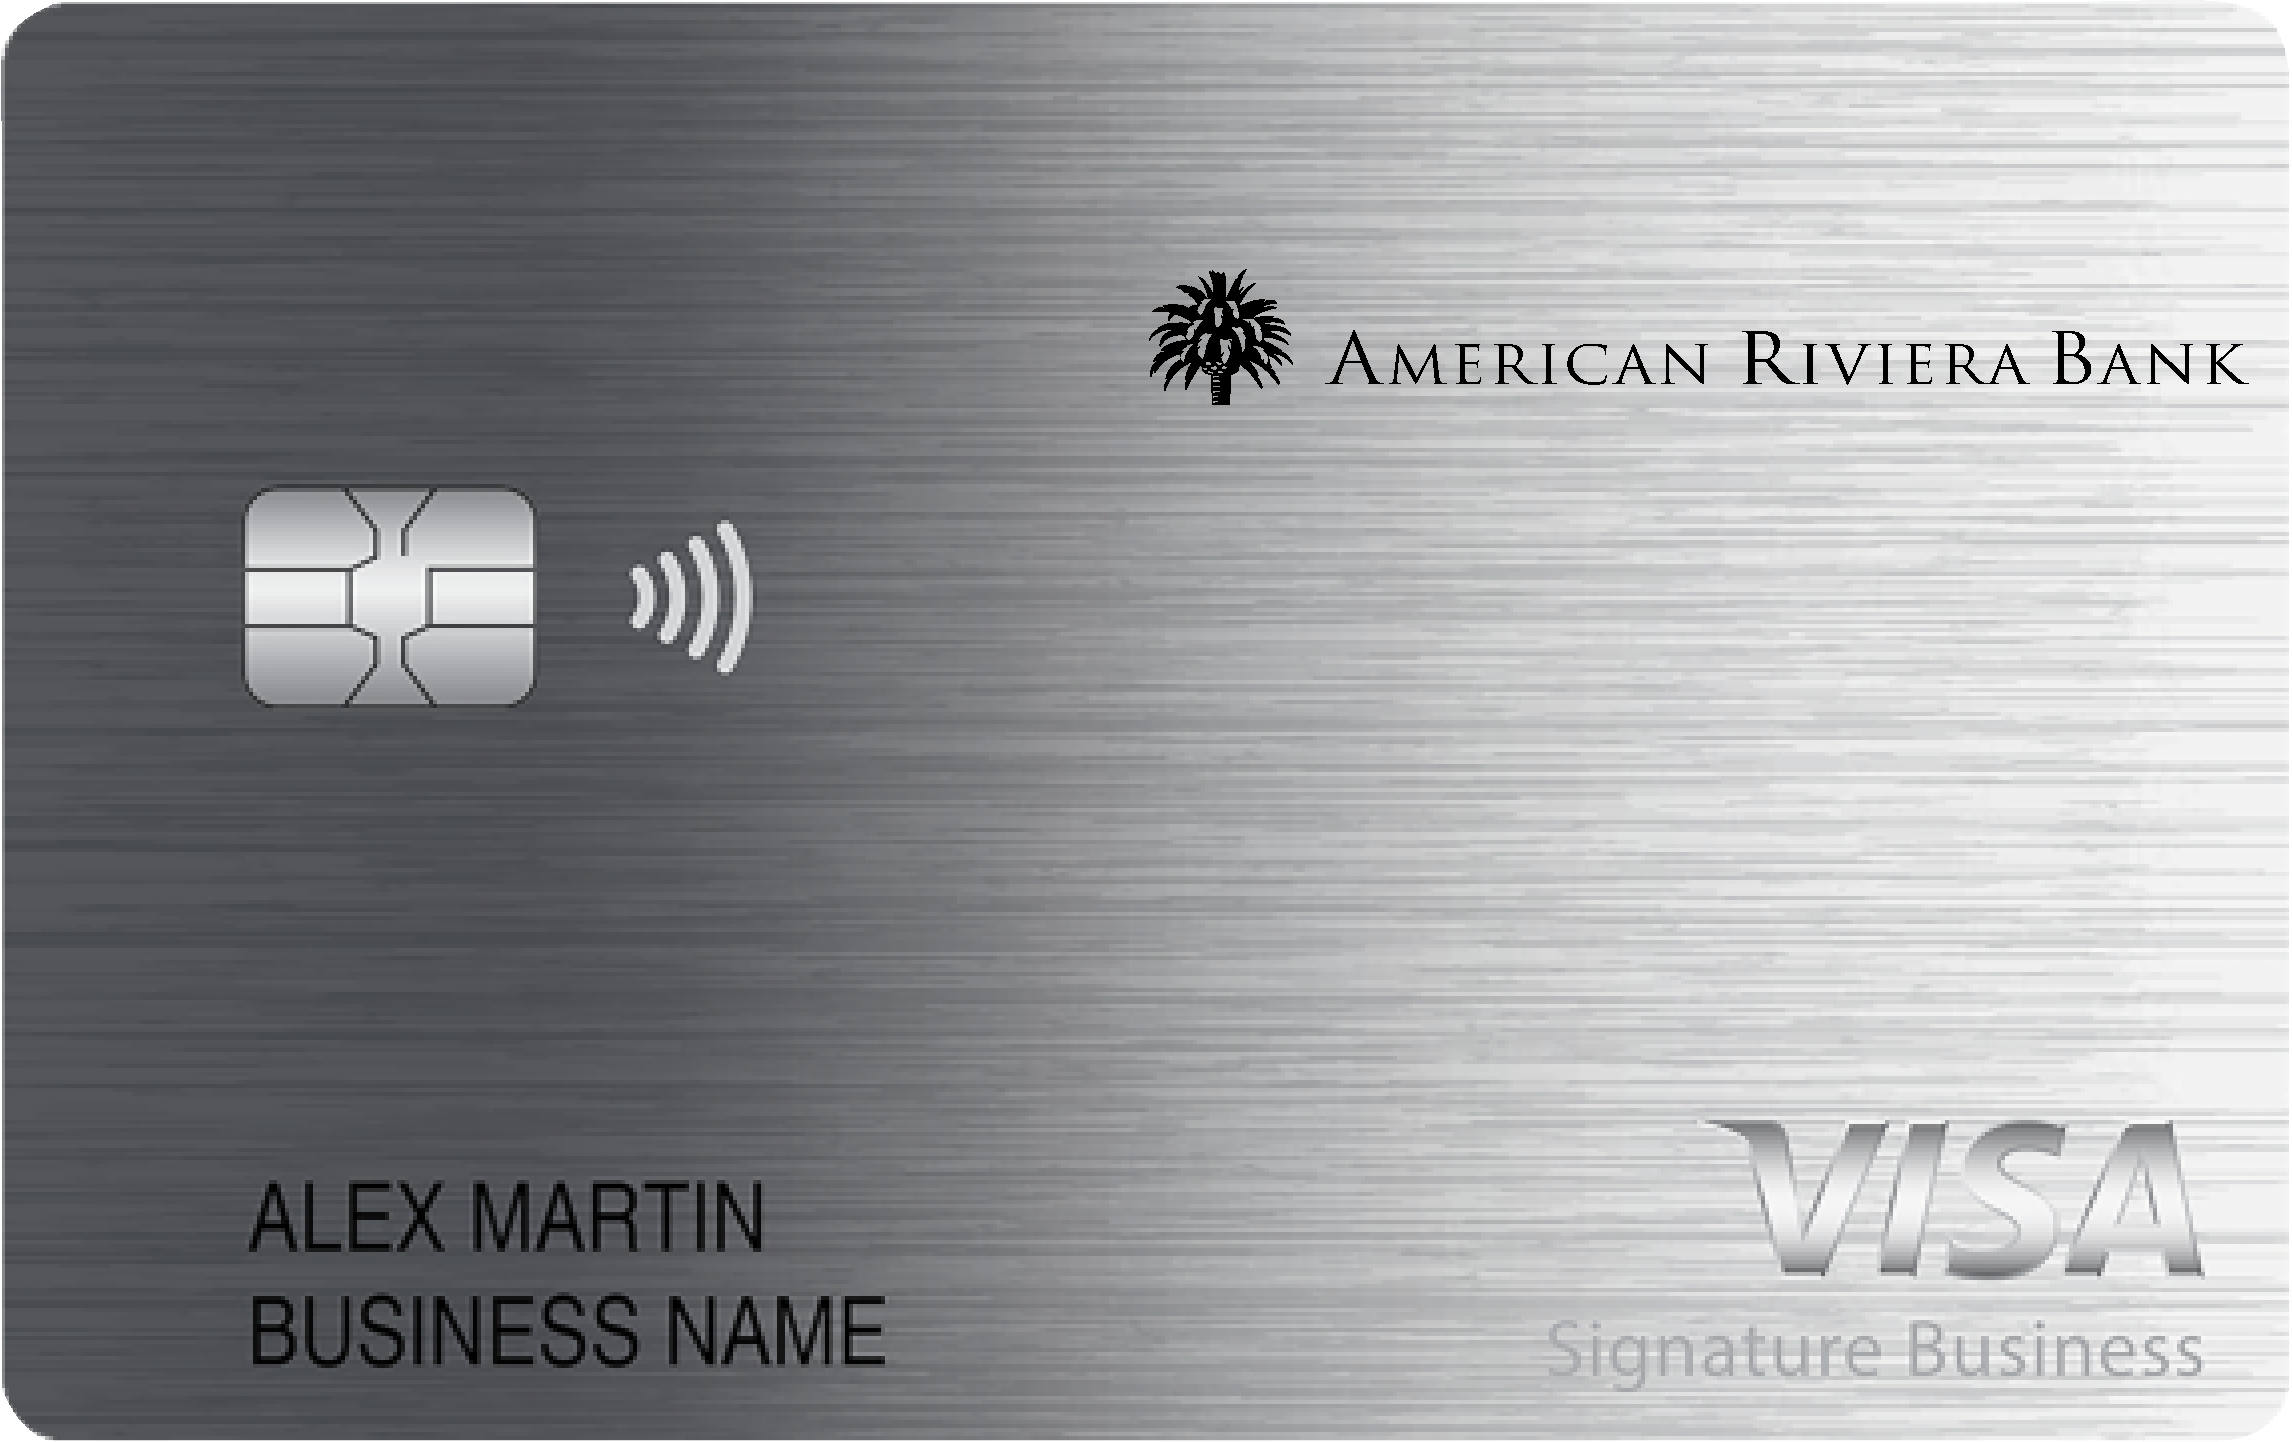 American Riviera Bank Smart Business Rewards Card